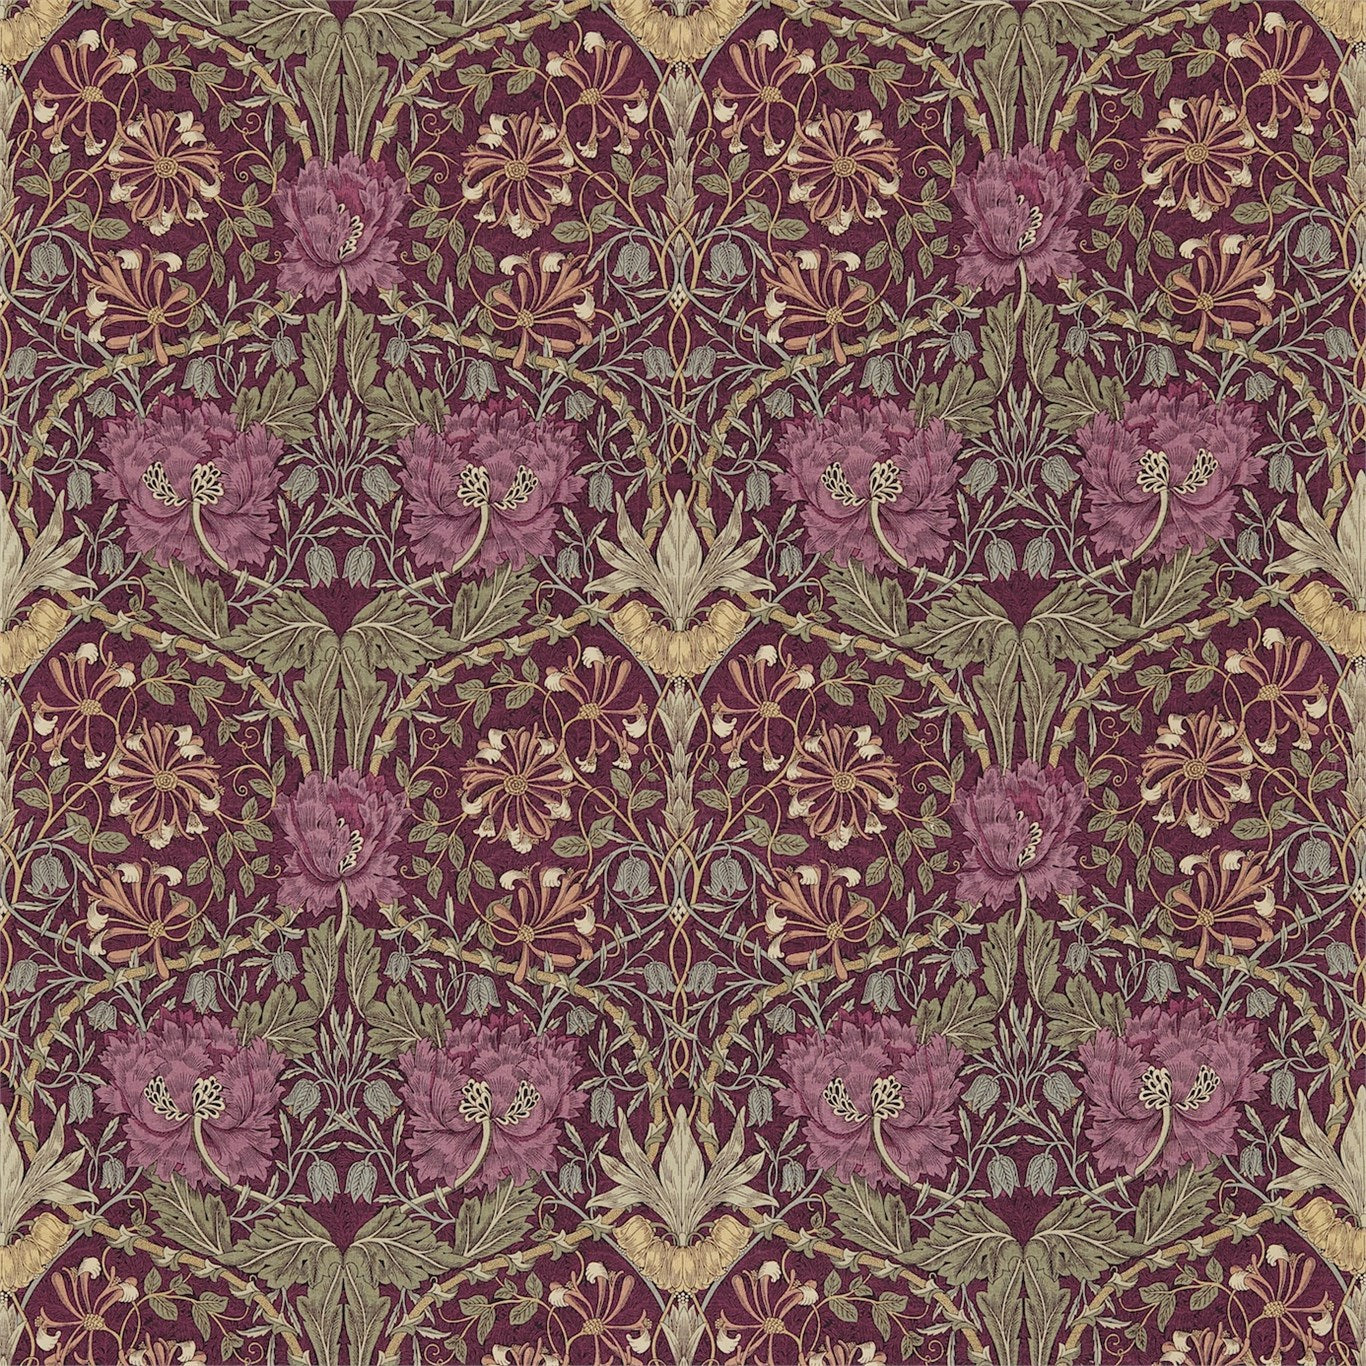 Honeysuckle & Tulip Fabric by Morris & Co.